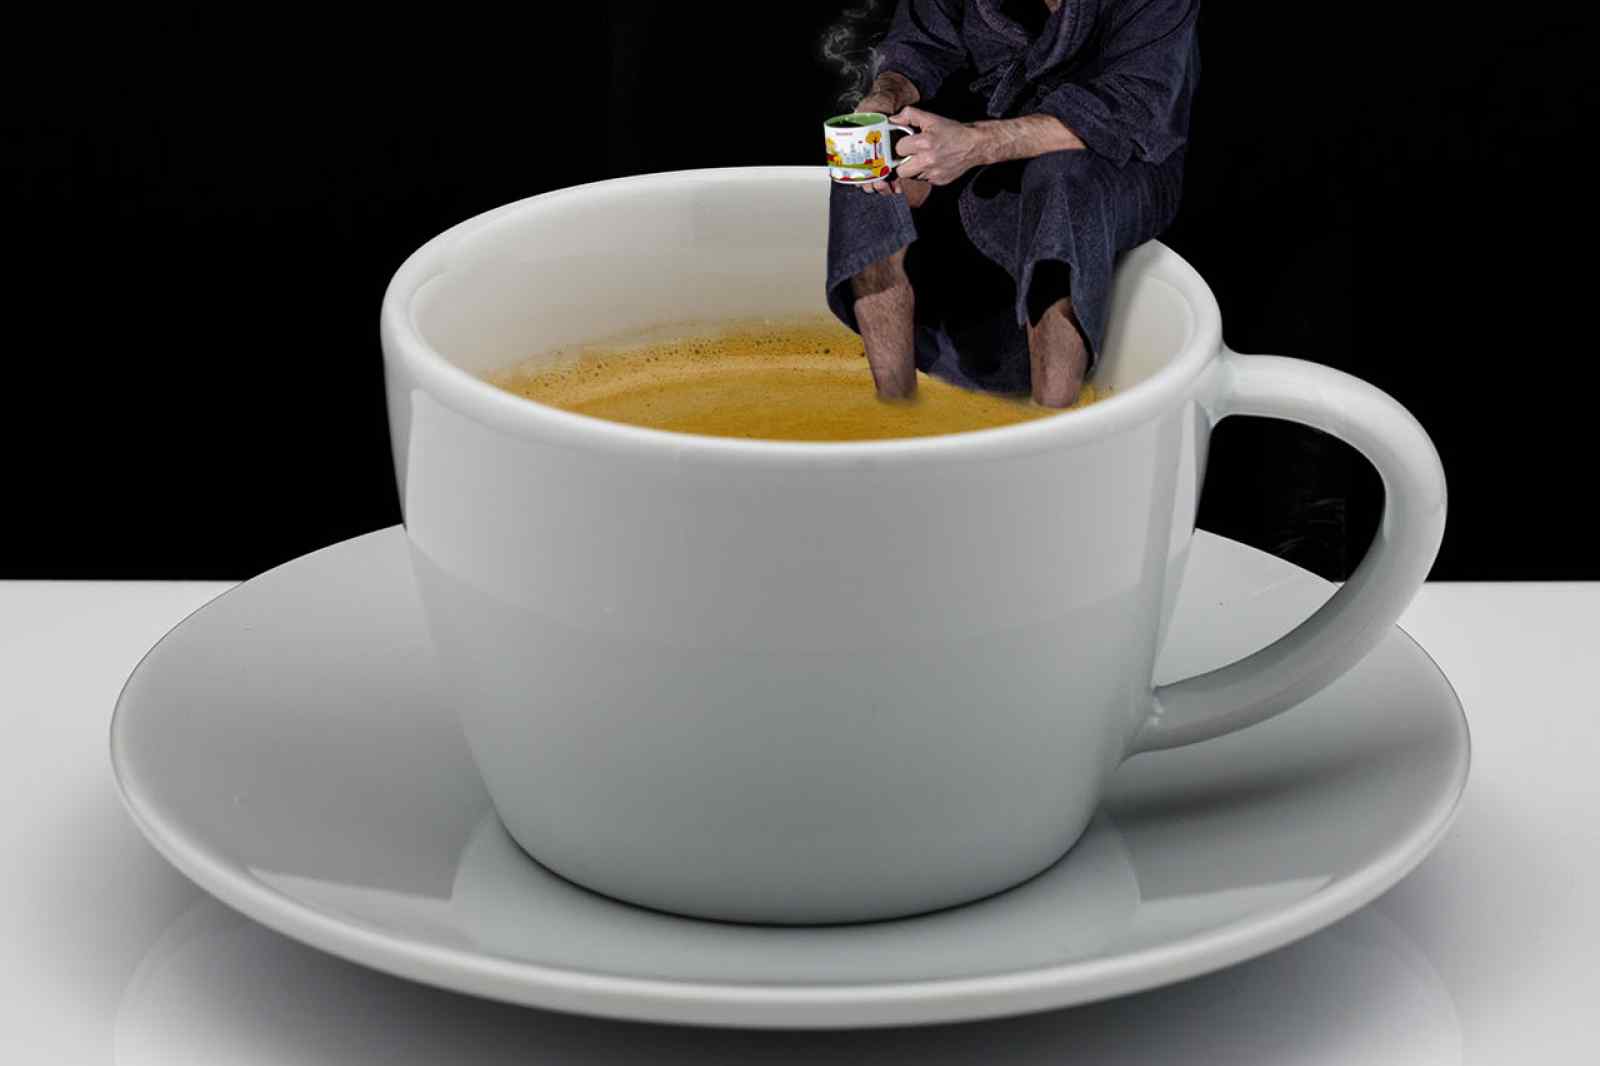 The Coffee-man on Sunday morning